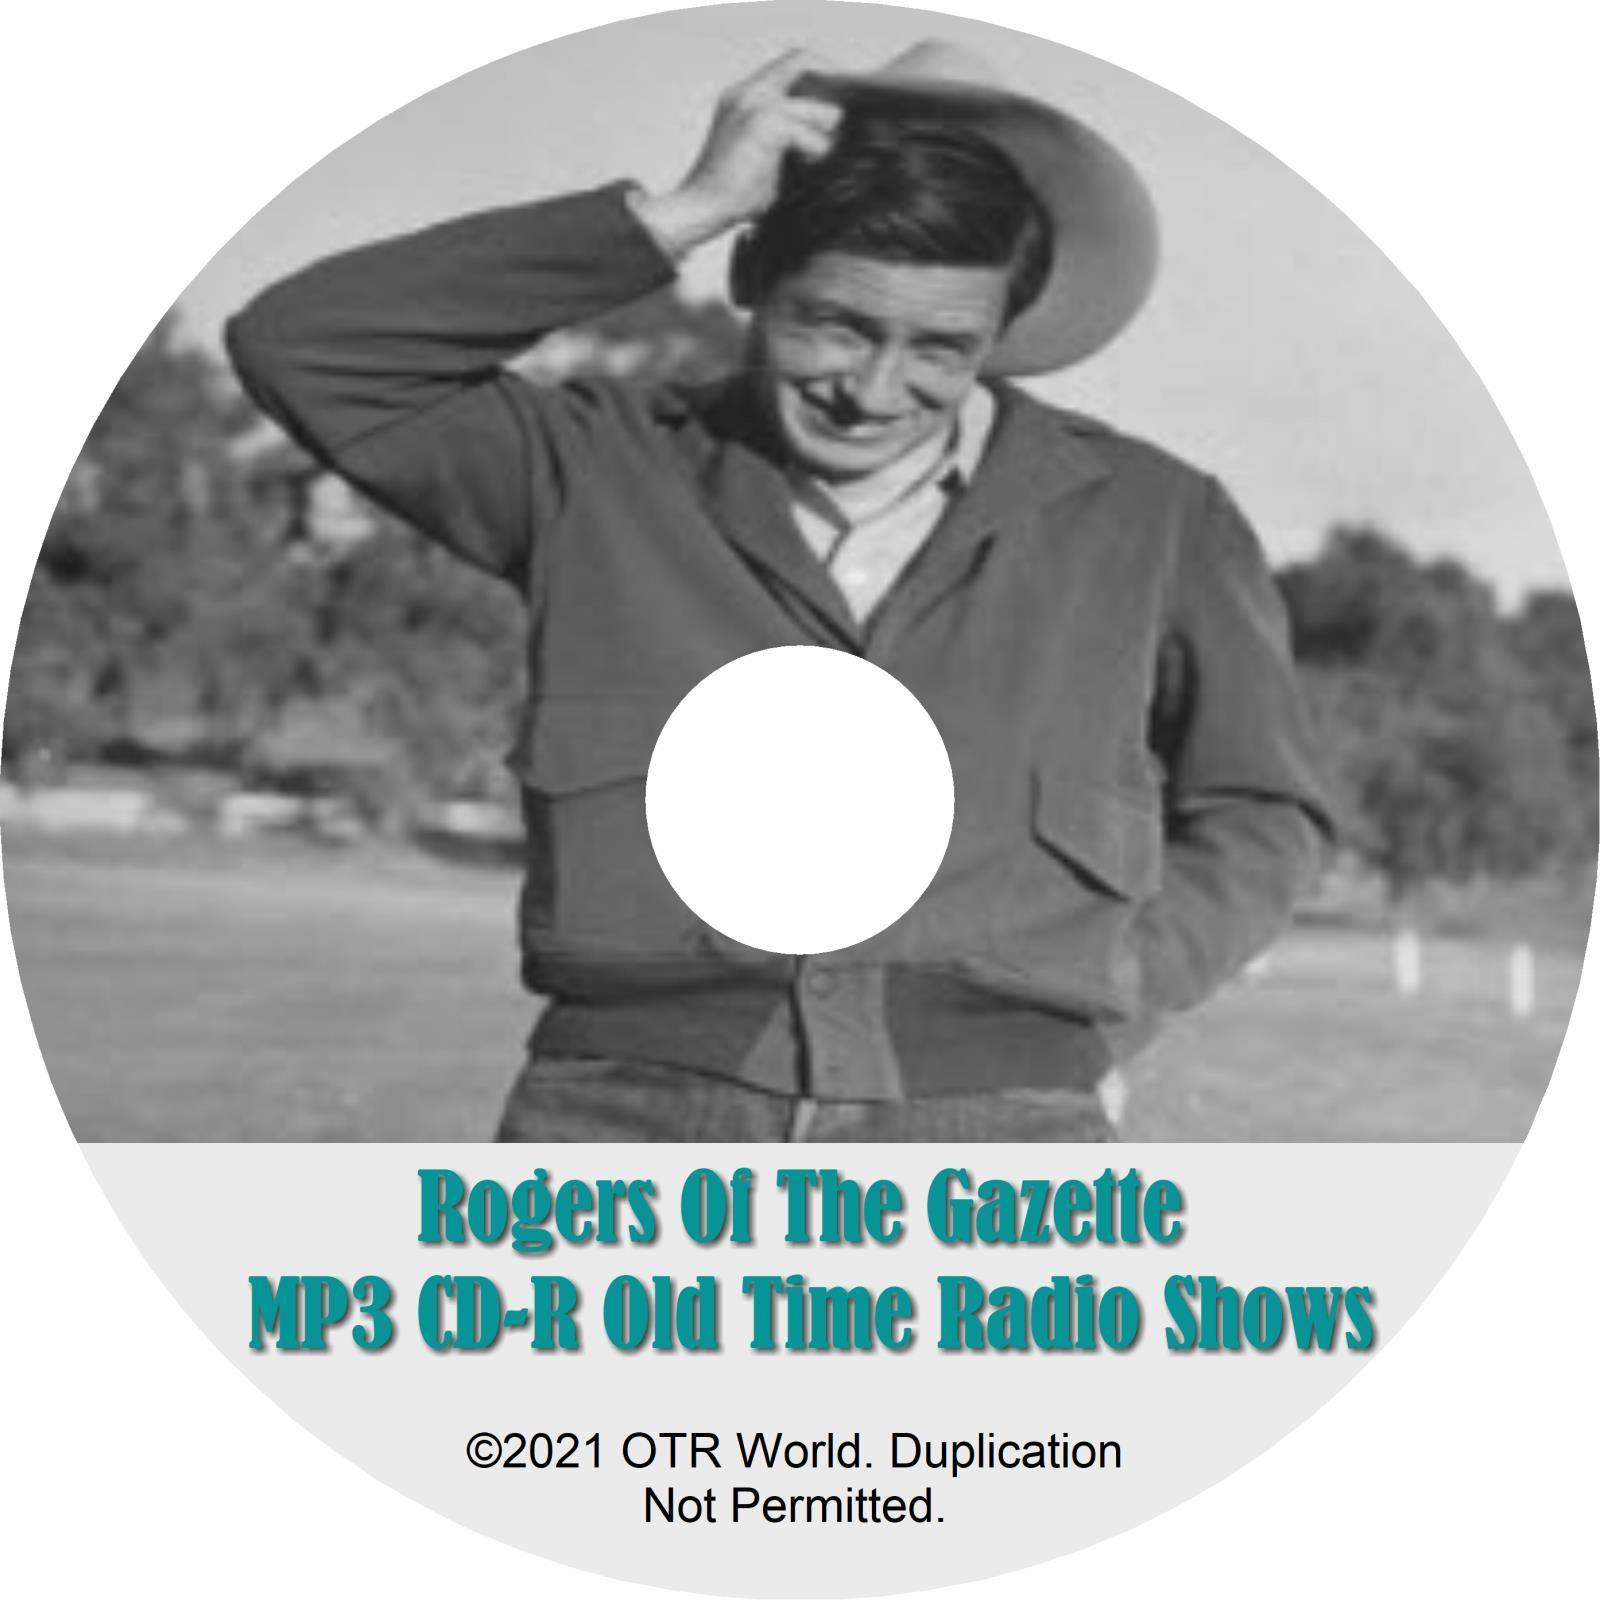 Rogers Of The Gazette OTR OTRS Old Time Radio Shows MP3 On CD-R 28 Episode - OTR World